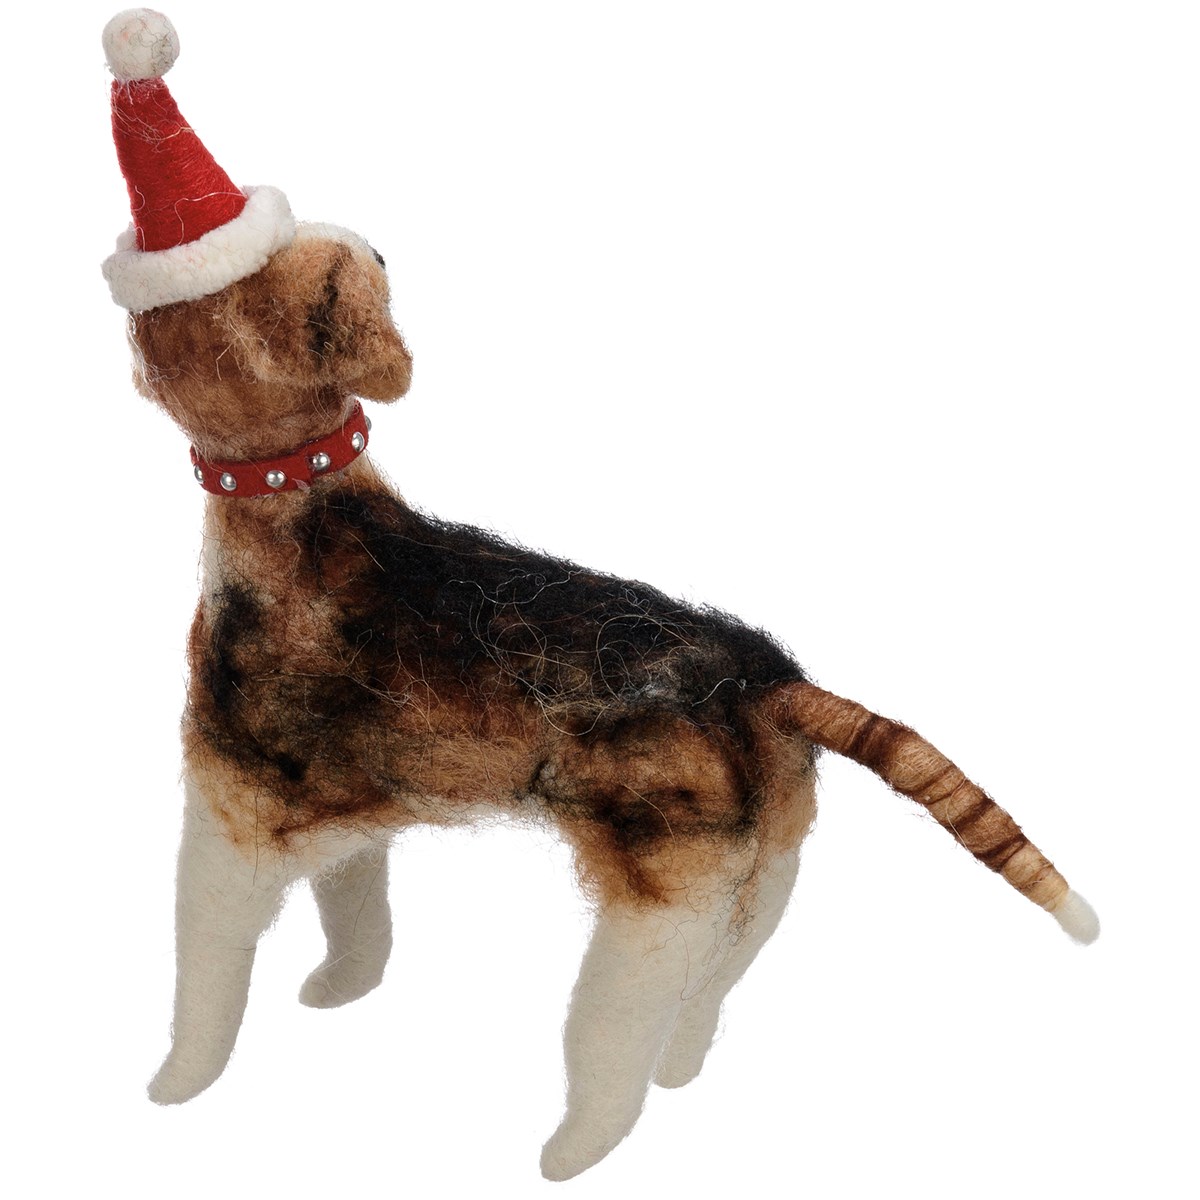 Critter - Beagle With Hat - 5" x 6.50" x 1.50" - Felt, Plastic